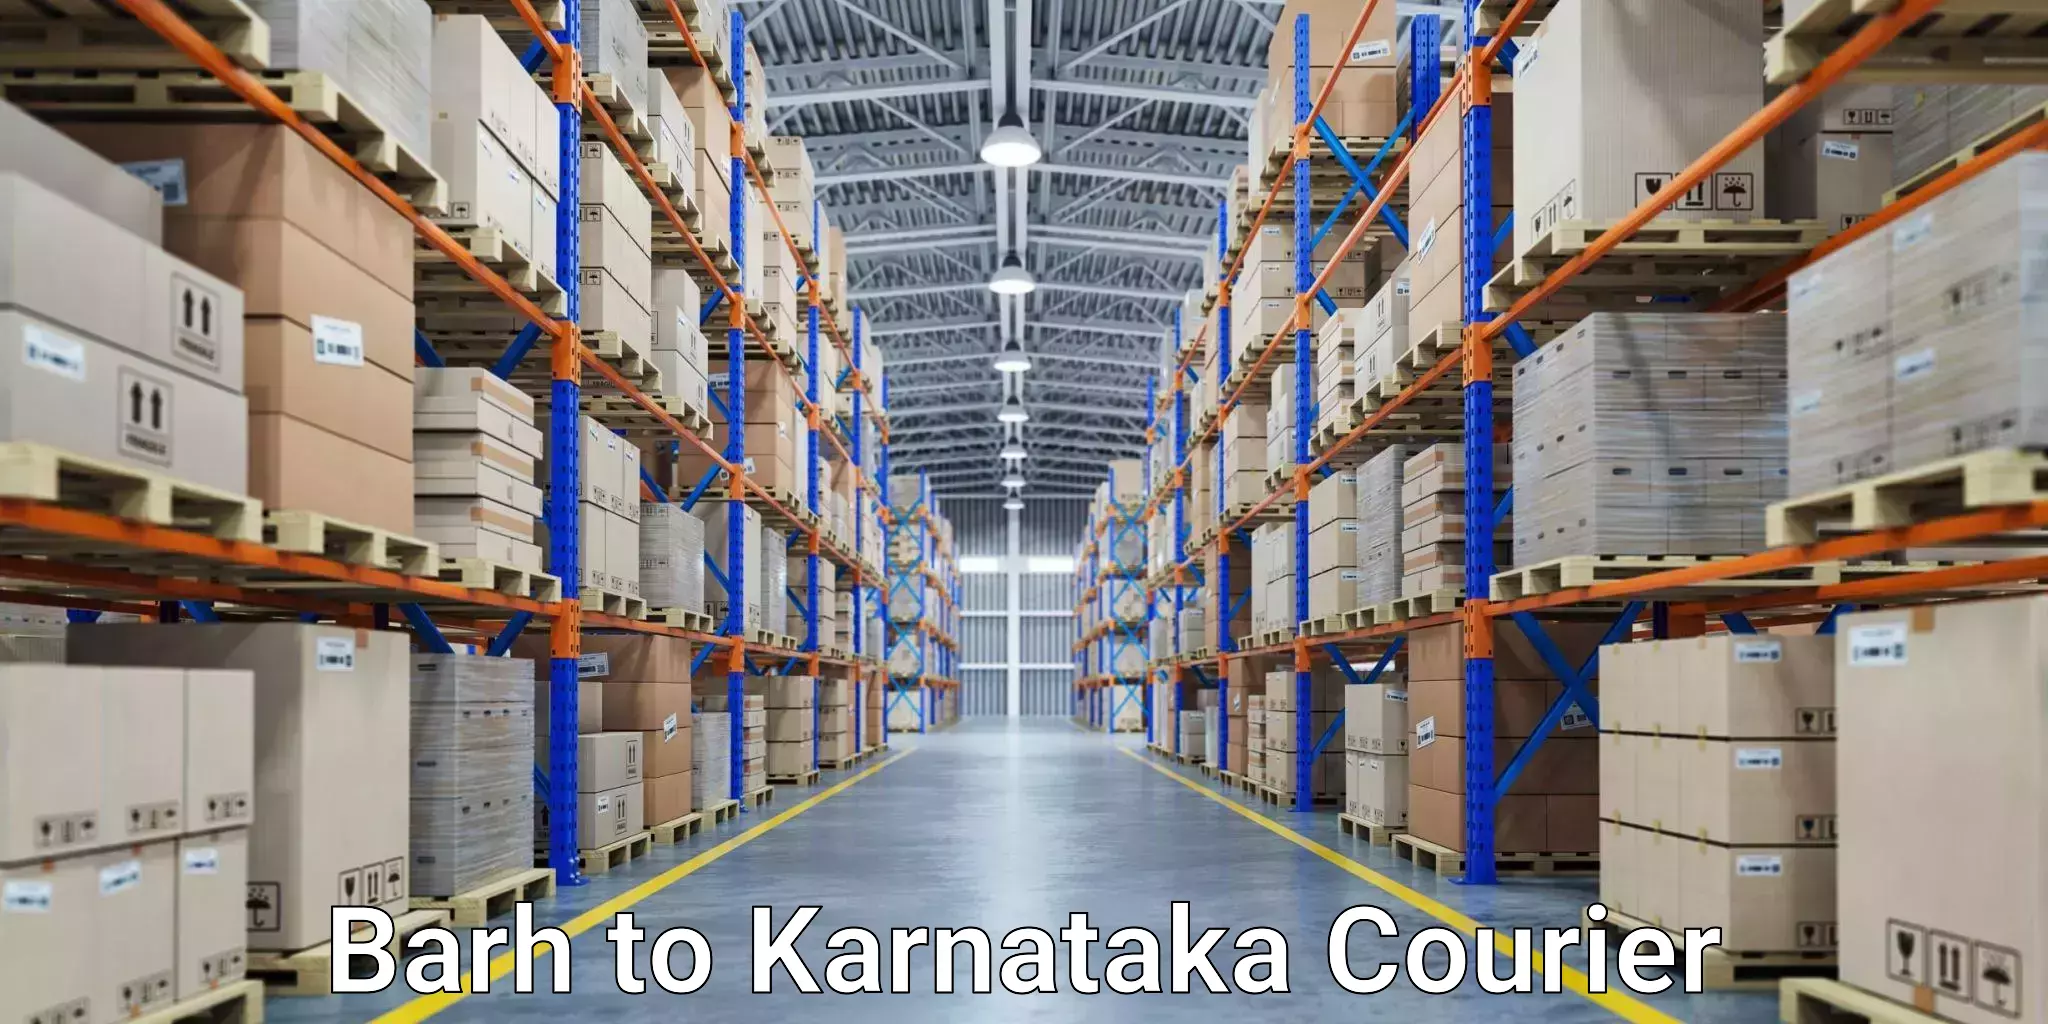 Cargo delivery service Barh to Karnataka